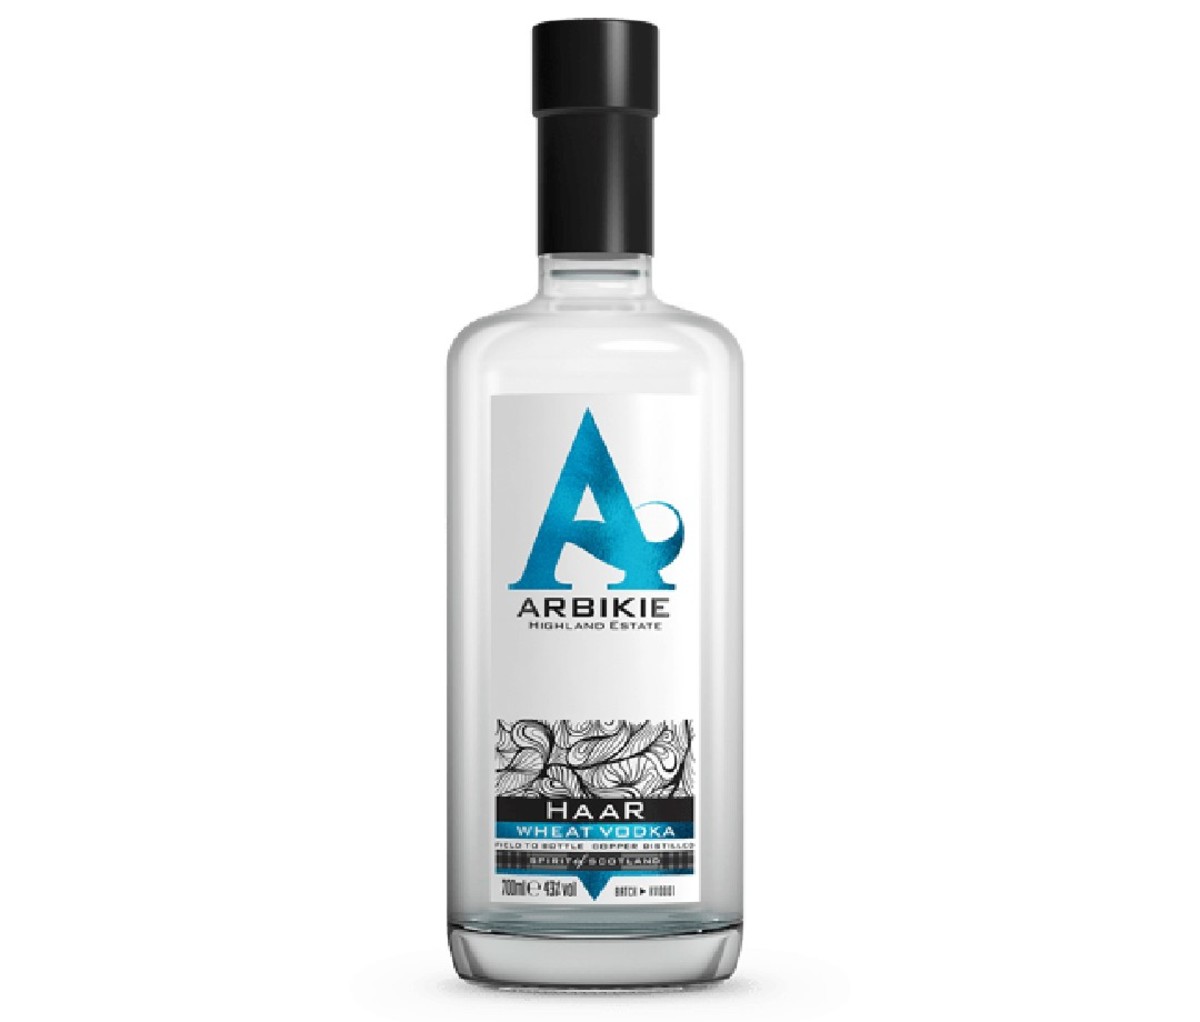 A bottle of Arbikie Haar Vodka.